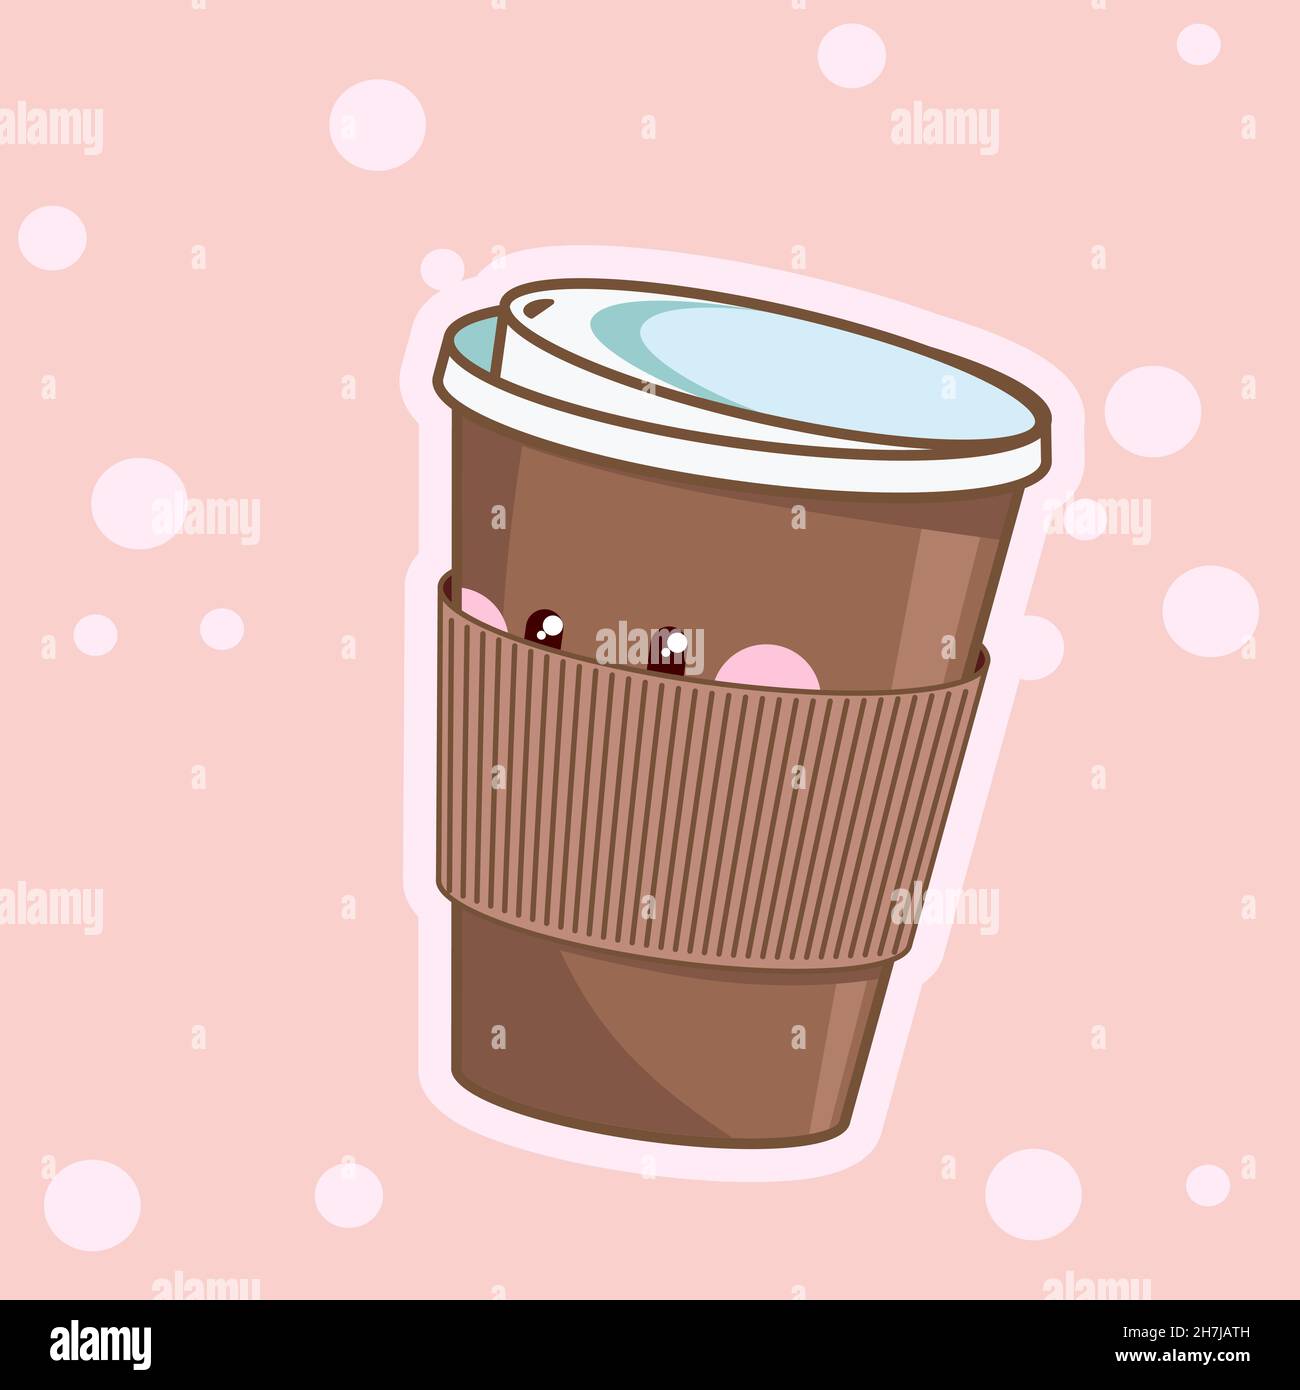 https://c8.alamy.com/comp/2H7JATH/kawaii-coffee-cute-cafe-drinks-vector-coffee-cups-with-happy-face-2H7JATH.jpg